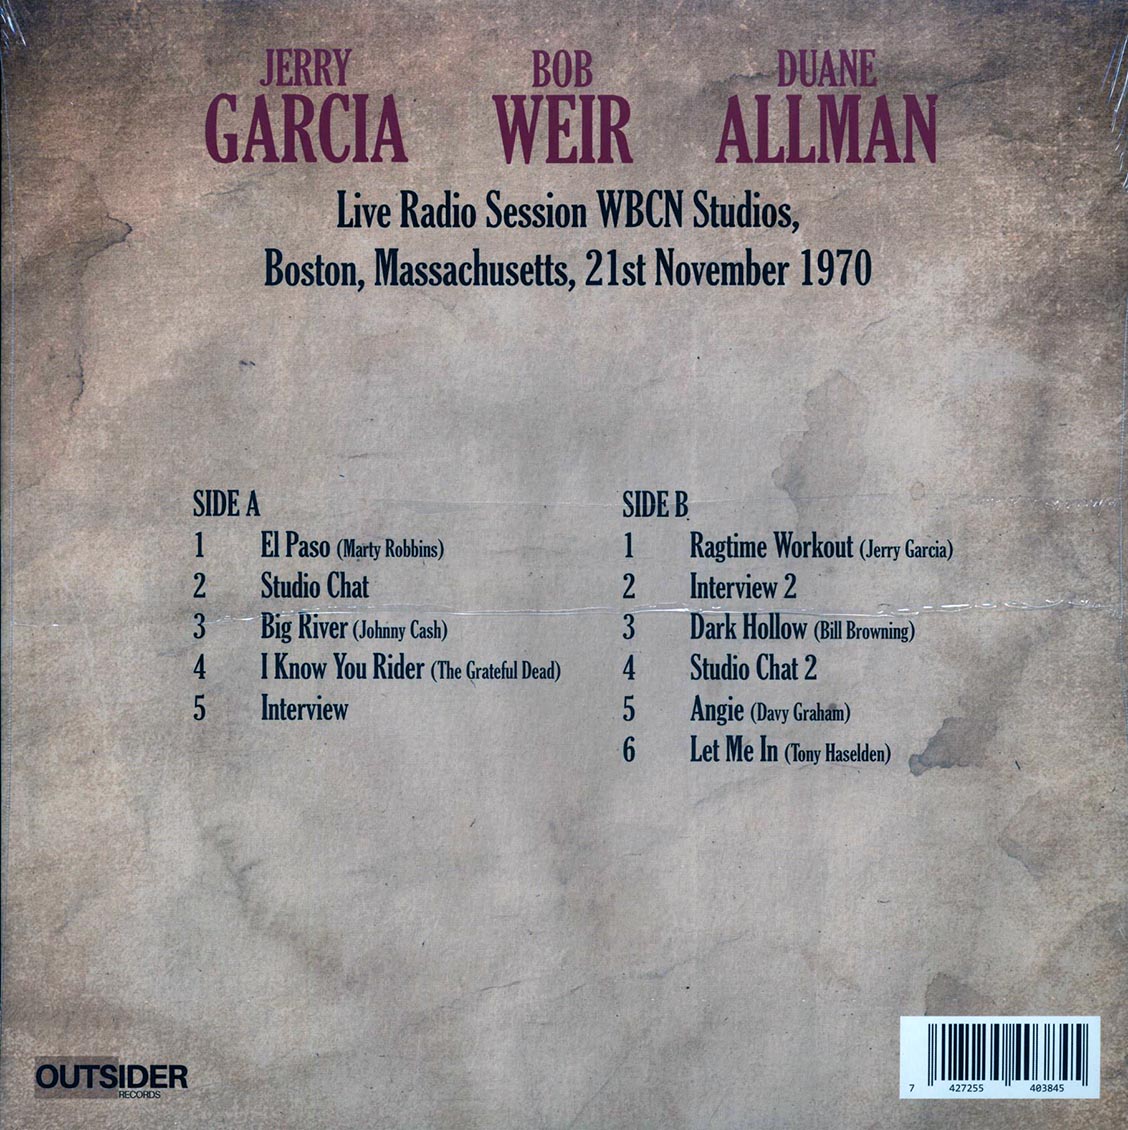 Jerry Garcia, Bob Weir, Duane Allman - Live 1970: The Boston Broadcast, Live Radio Session WBCN Studios, Boston, MA, 21st November 1970 (ltd. ed.) (red vinyl) - Vinyl LP, LP